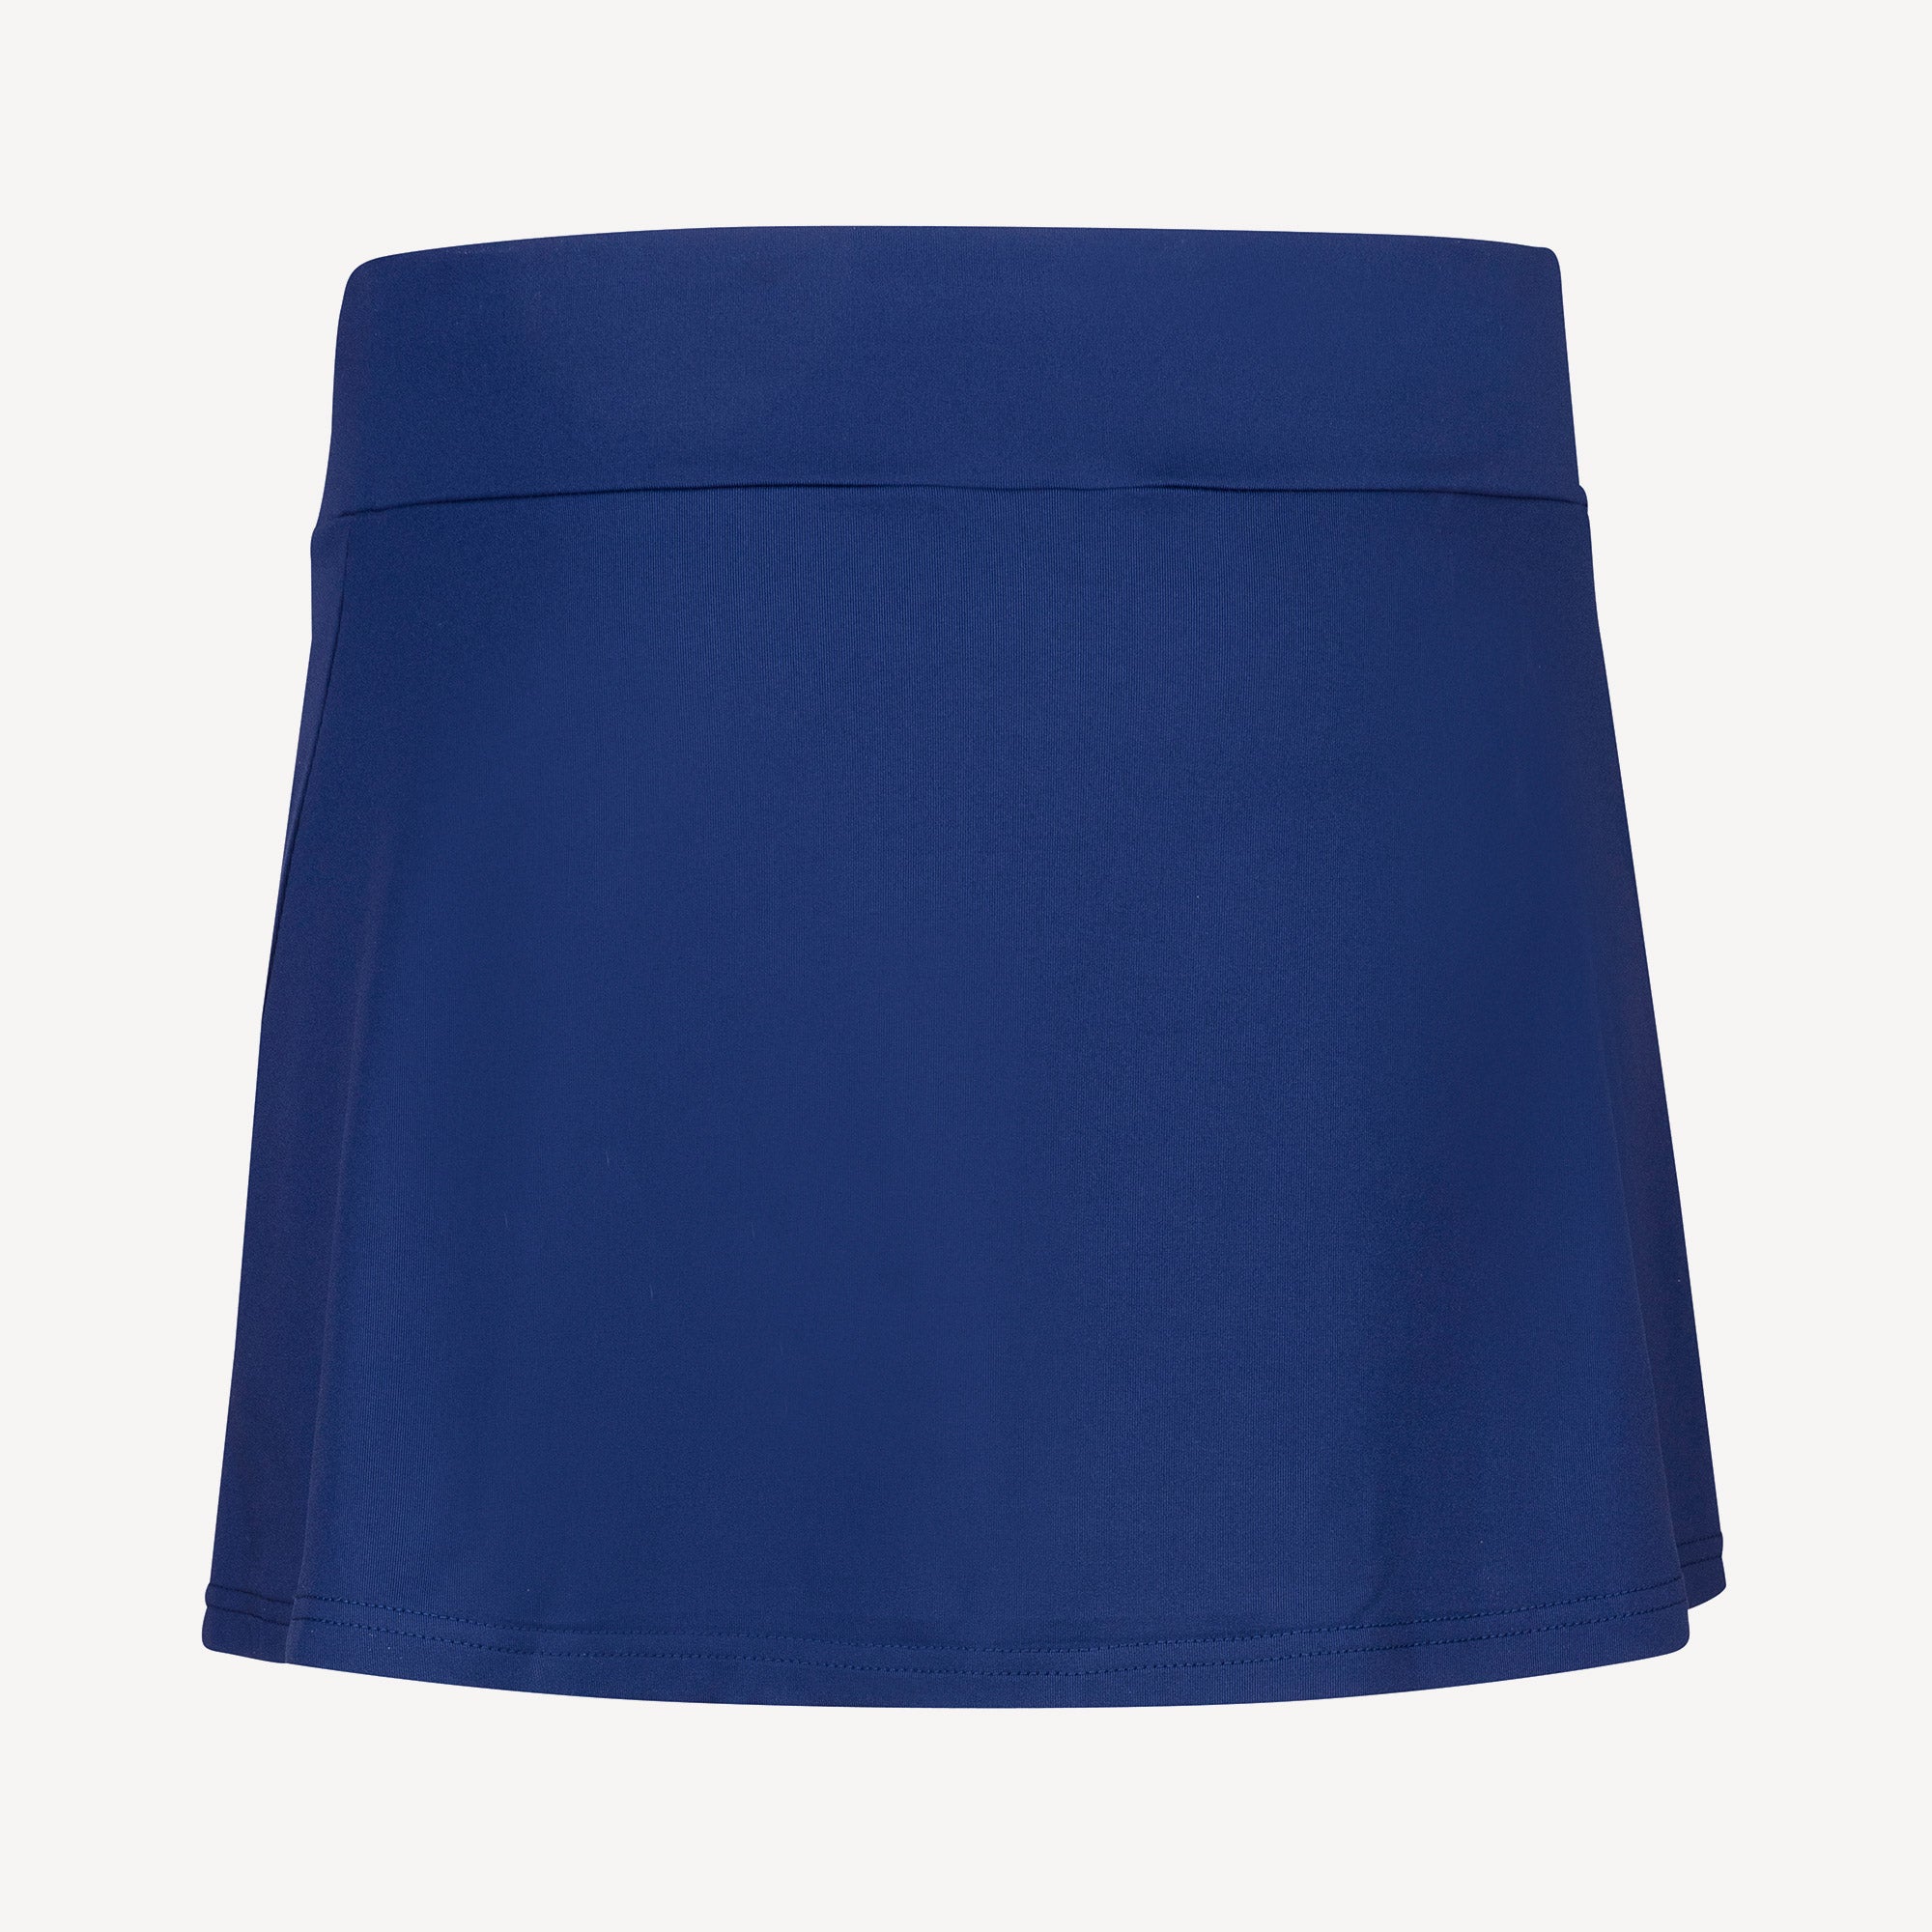 Babolat Play Club Women's Tennis Skirt Blue (2)